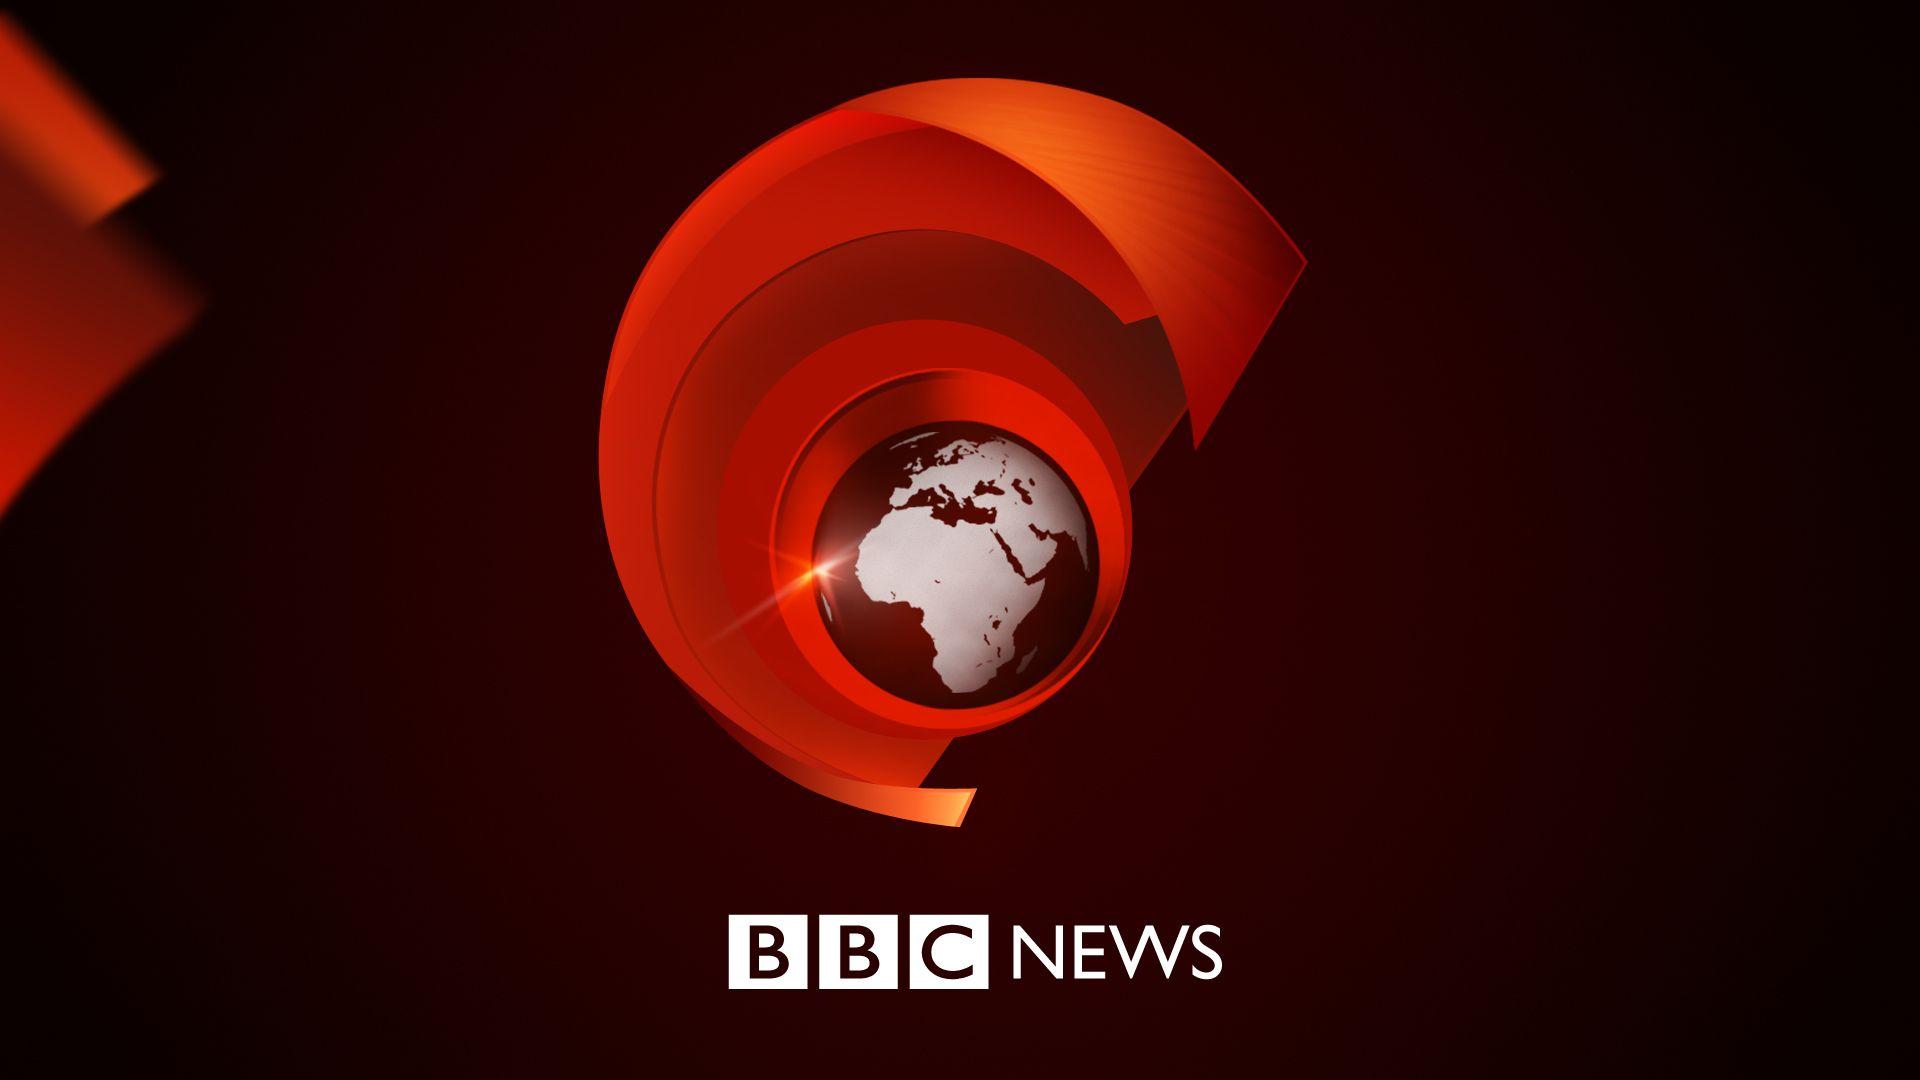 The Globe Newspaper Logo - BBC News logo recreation